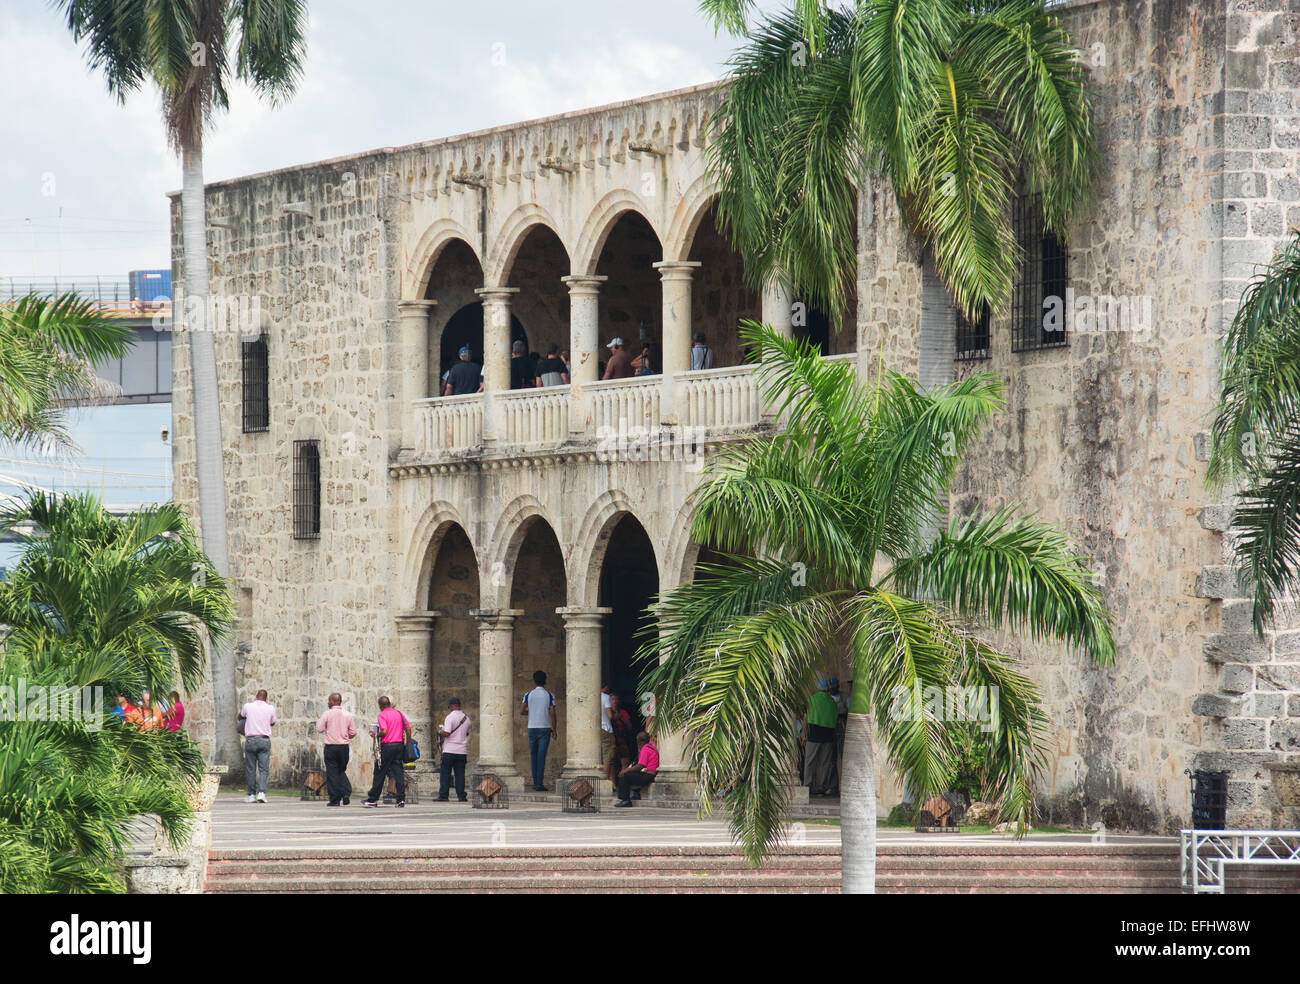 SANTO DOMINGO, DOMINICAN REPUBLIC. The Moorish-influenced Alcazar de Colon, built by Columbus's son Diego on Plaza Espana. Stock Photo